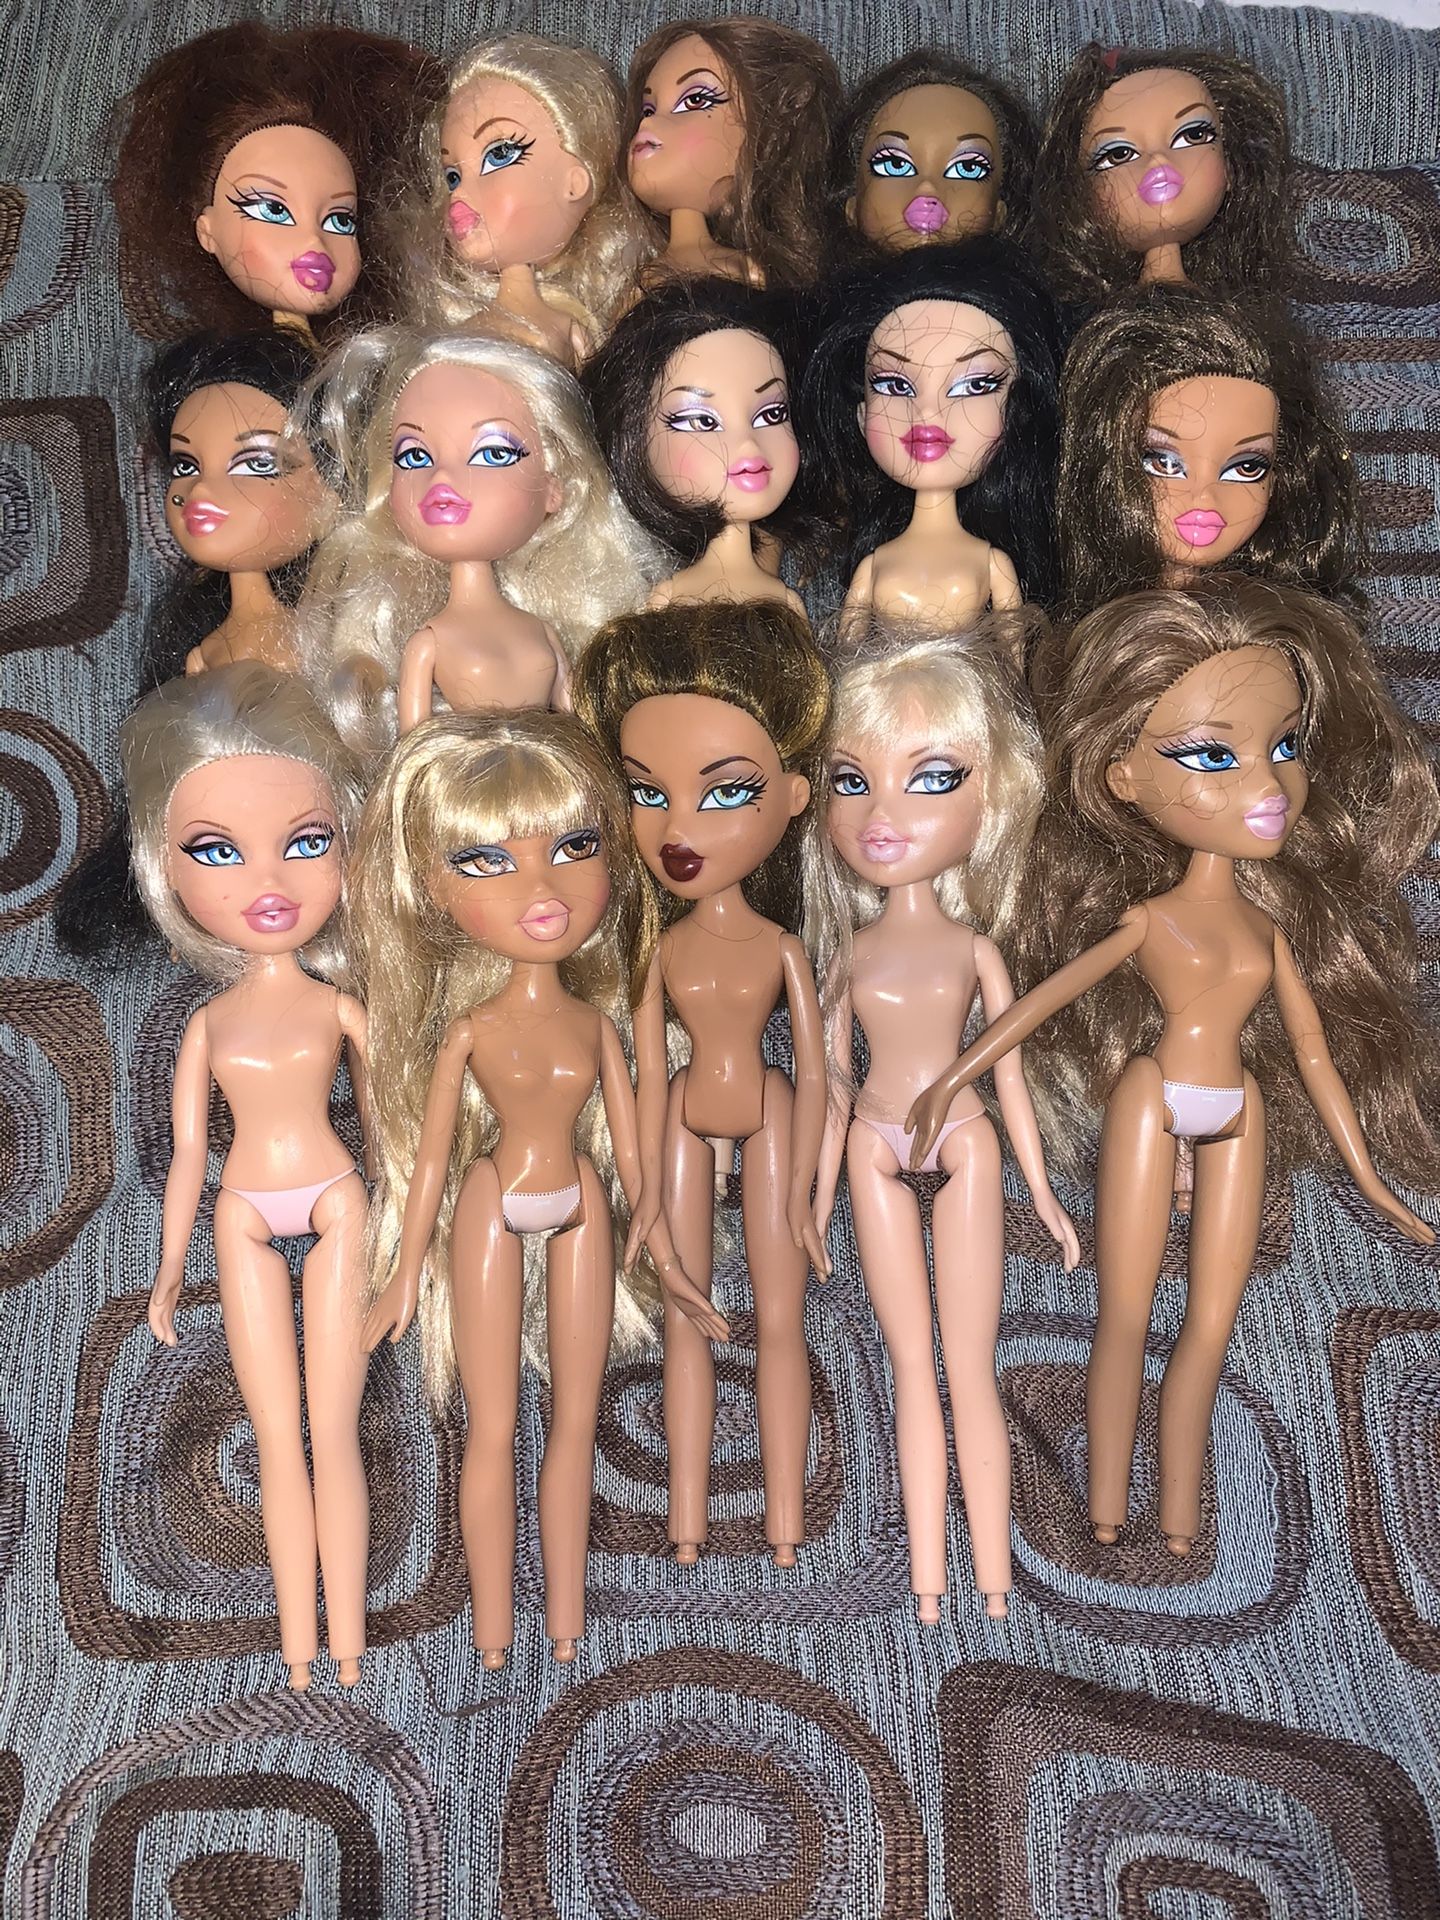 Lot of 15 pieces of used Bratz dolls.